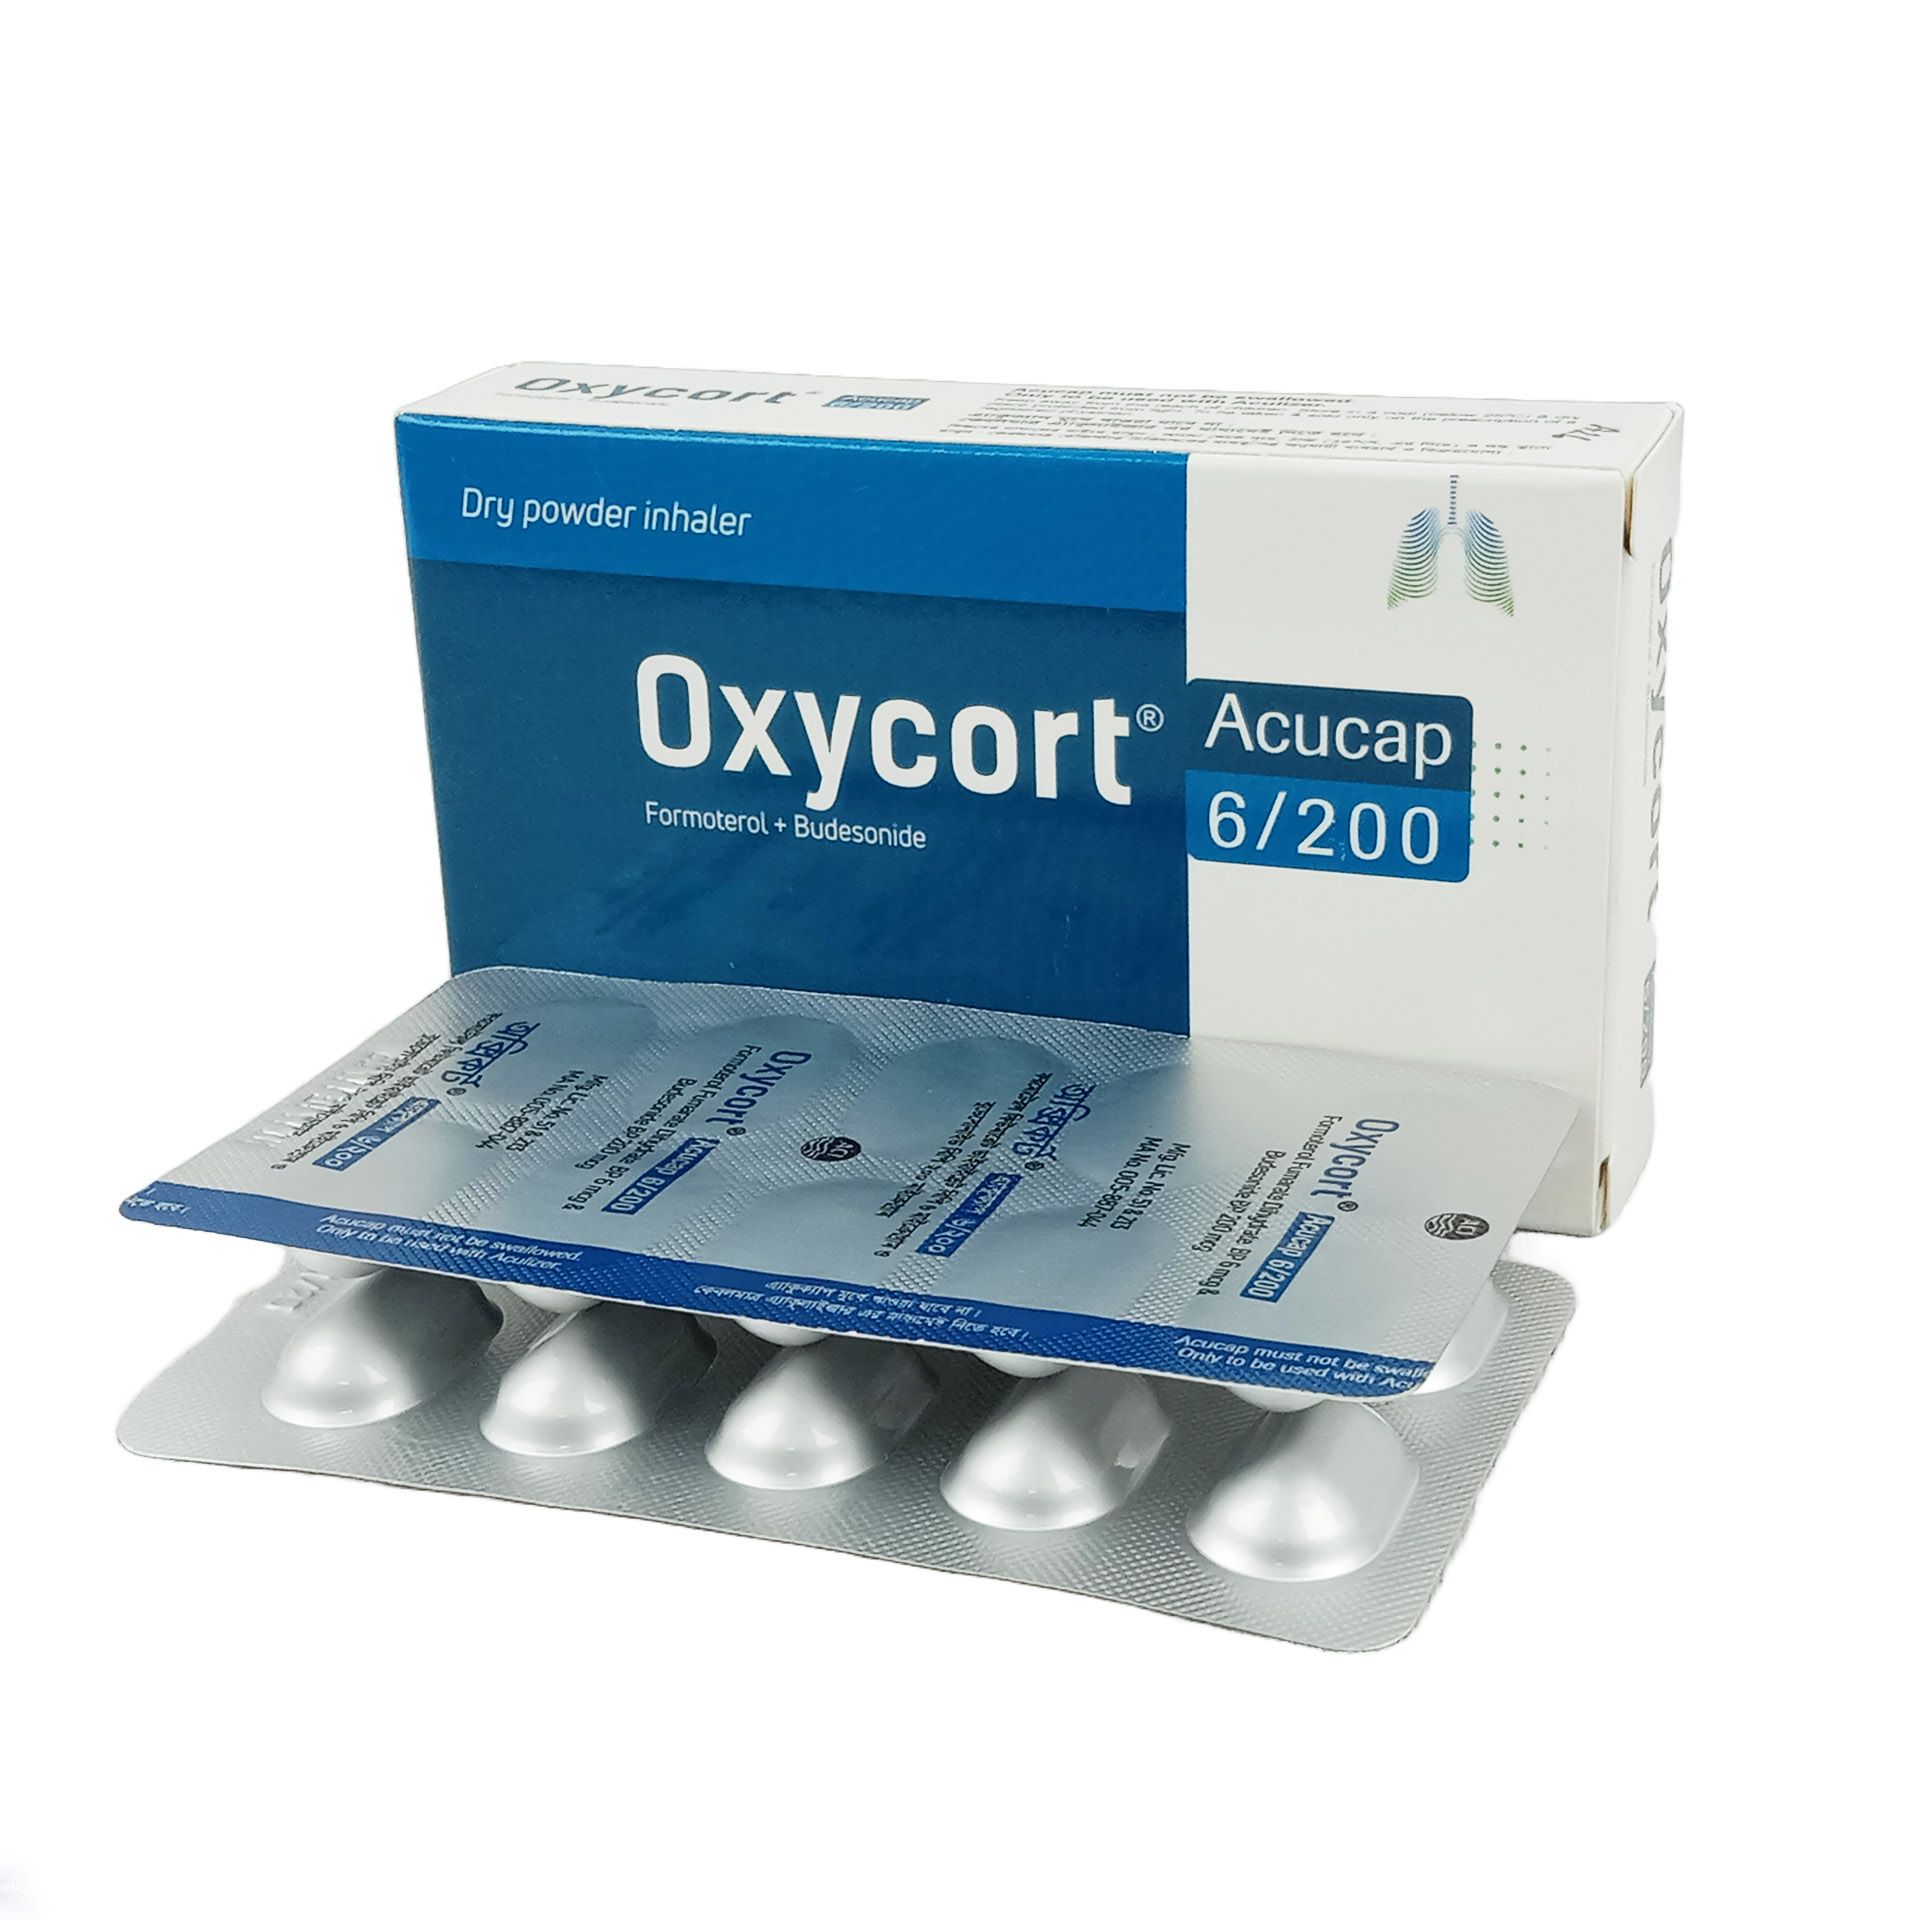 Oxycort 6/200 Acucap 200mcg+6mcg capsule